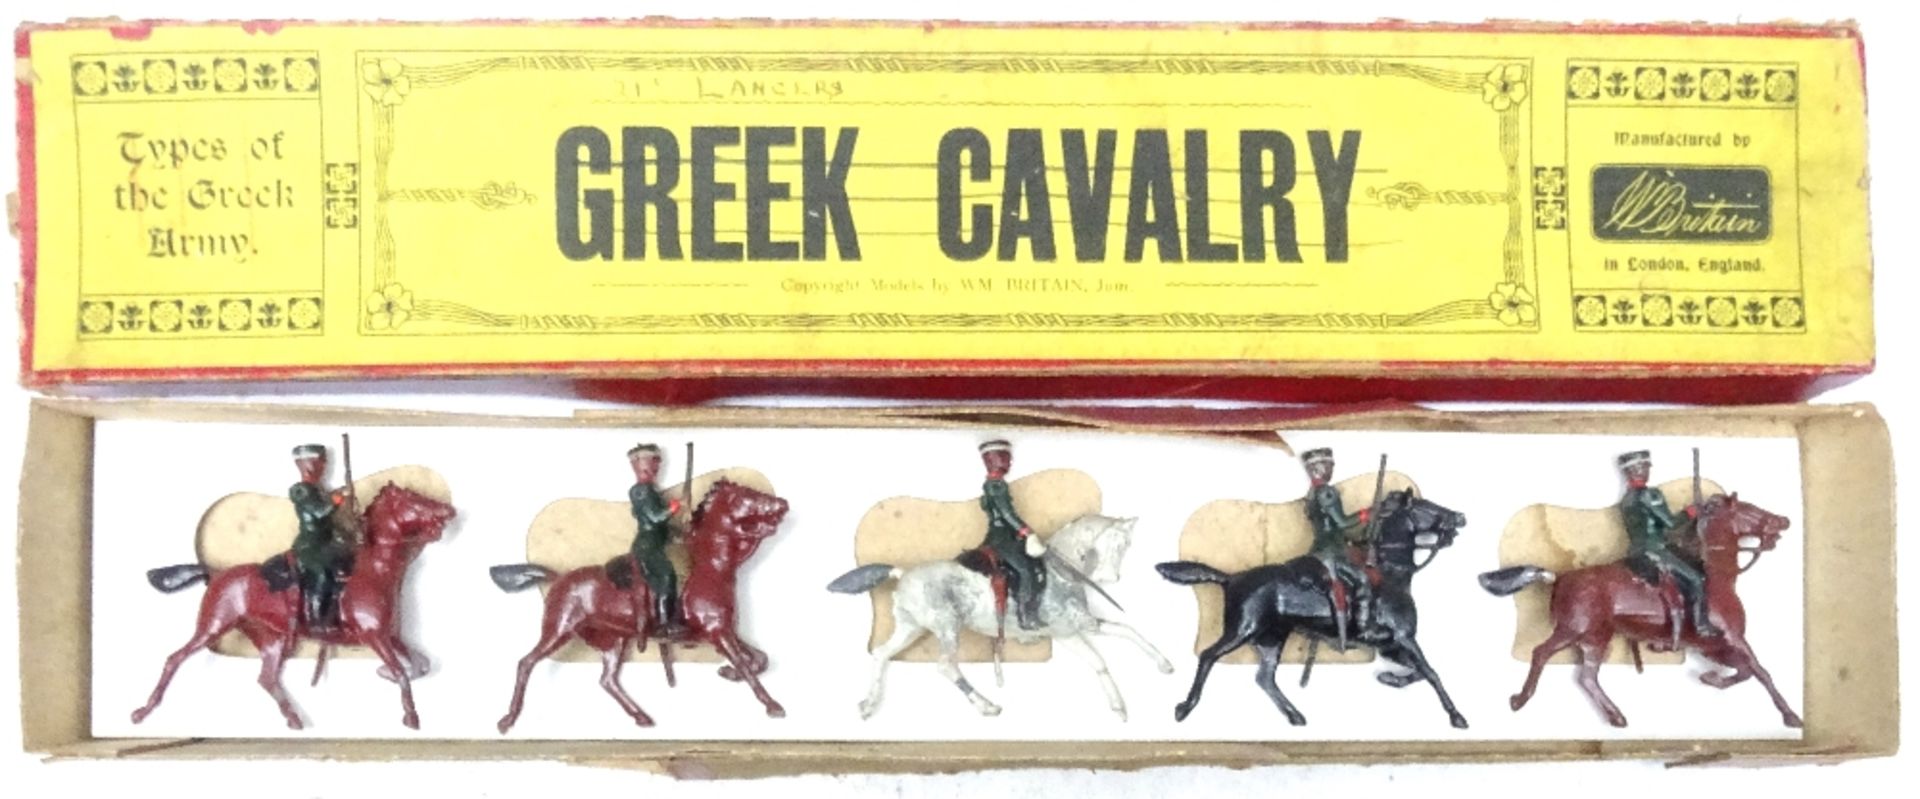 Britains set 170, Greek Cavalry - Image 5 of 5